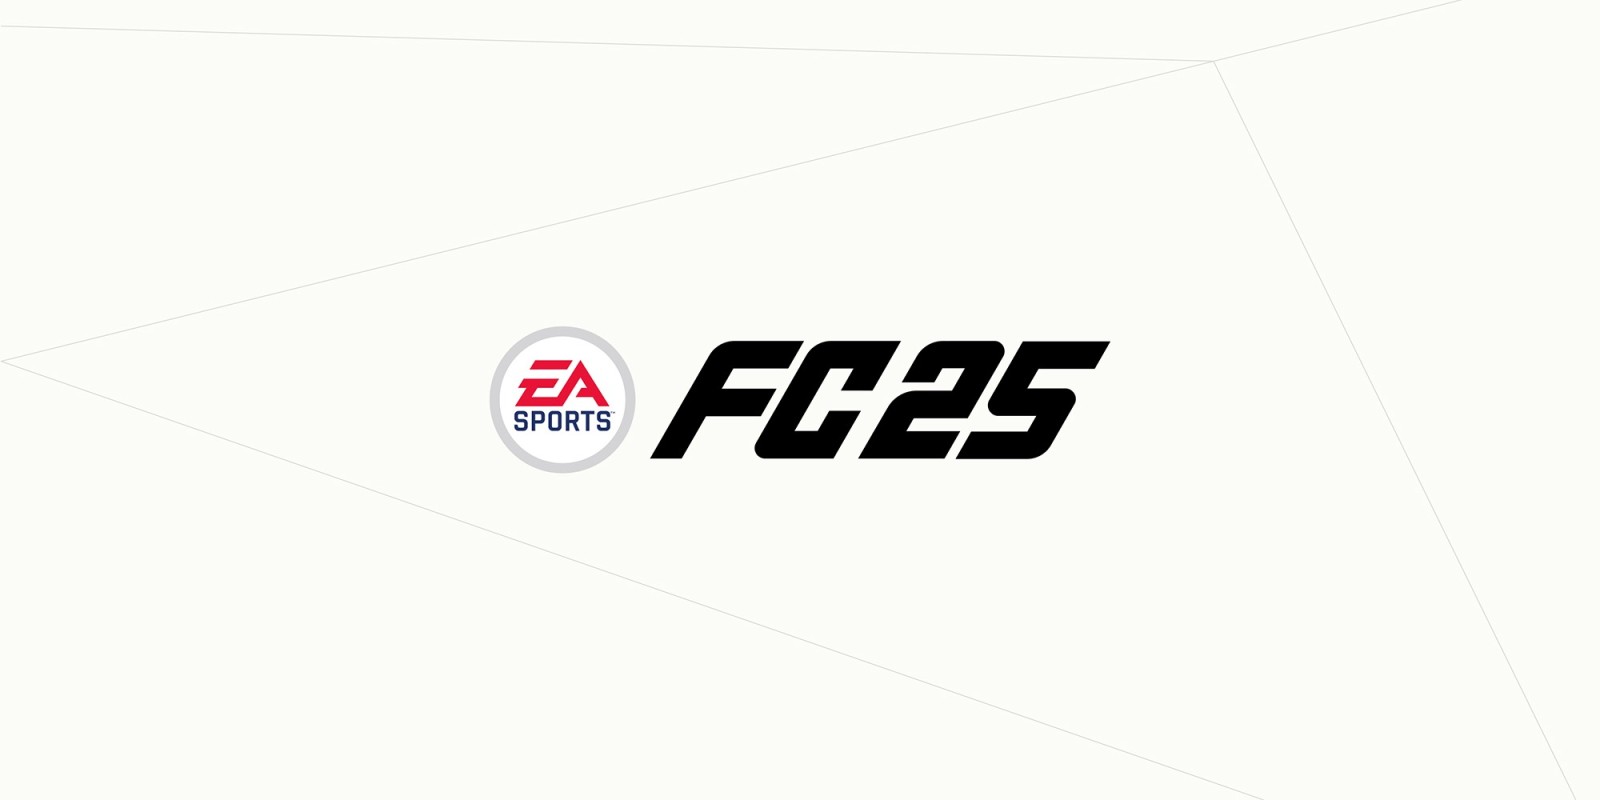 EA SPORTS FC™ 25